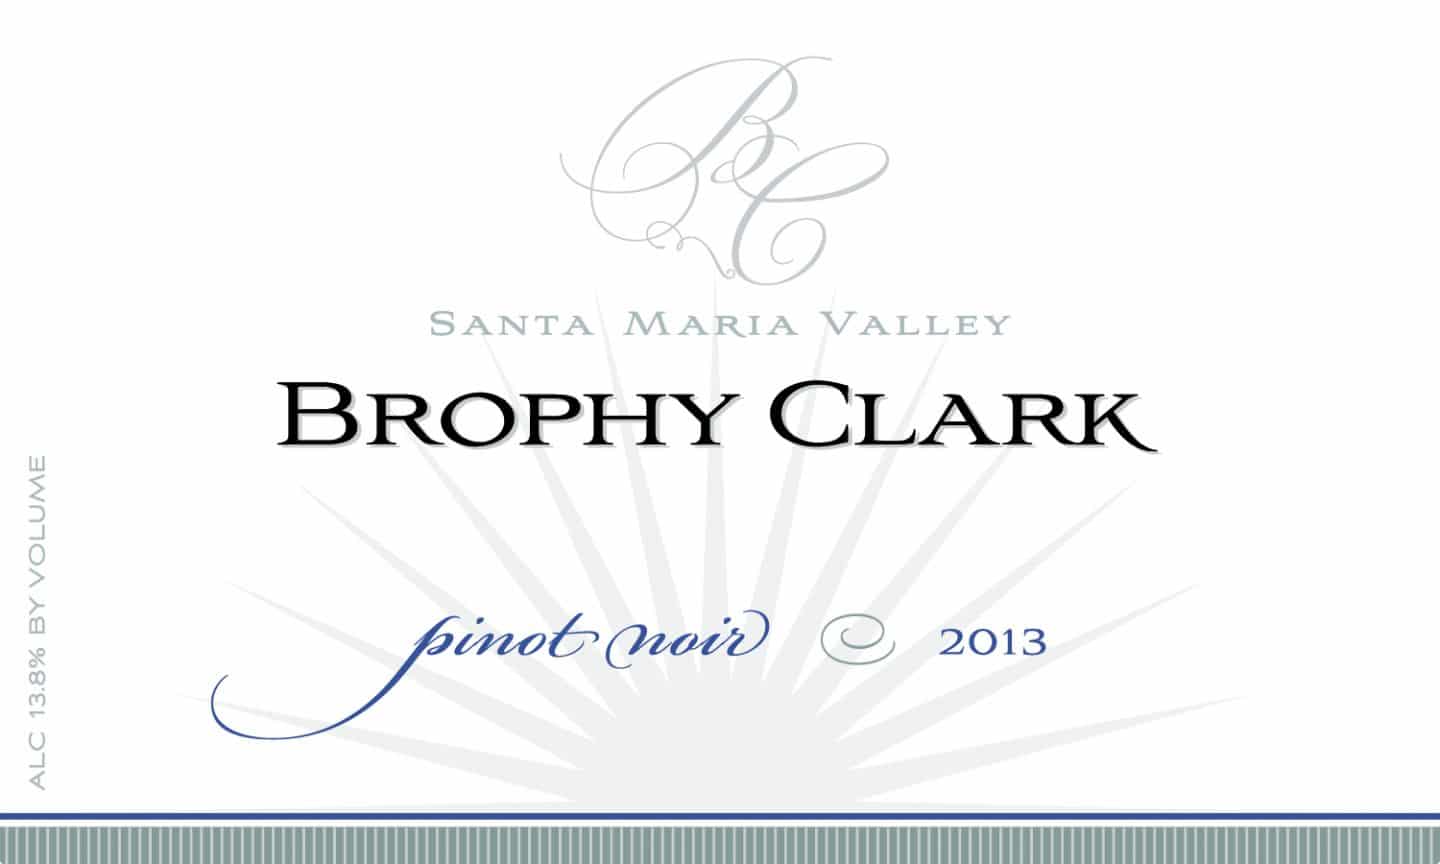 Brophy Clark Cellars